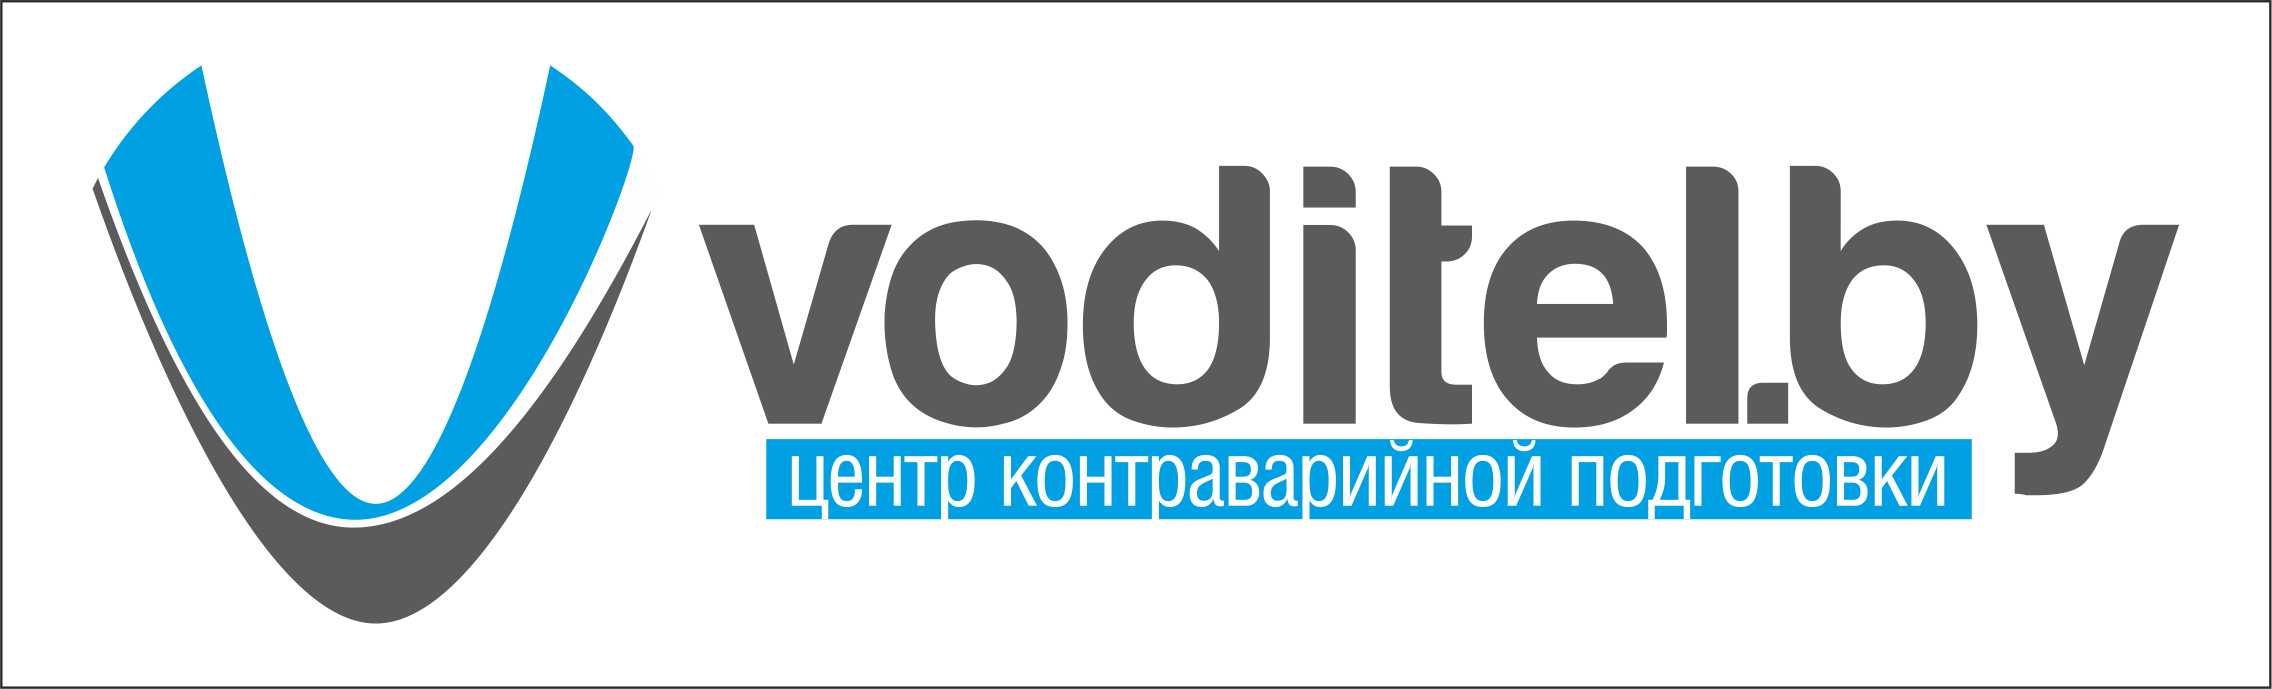 voditel.by - Центр контраварийной подготовки